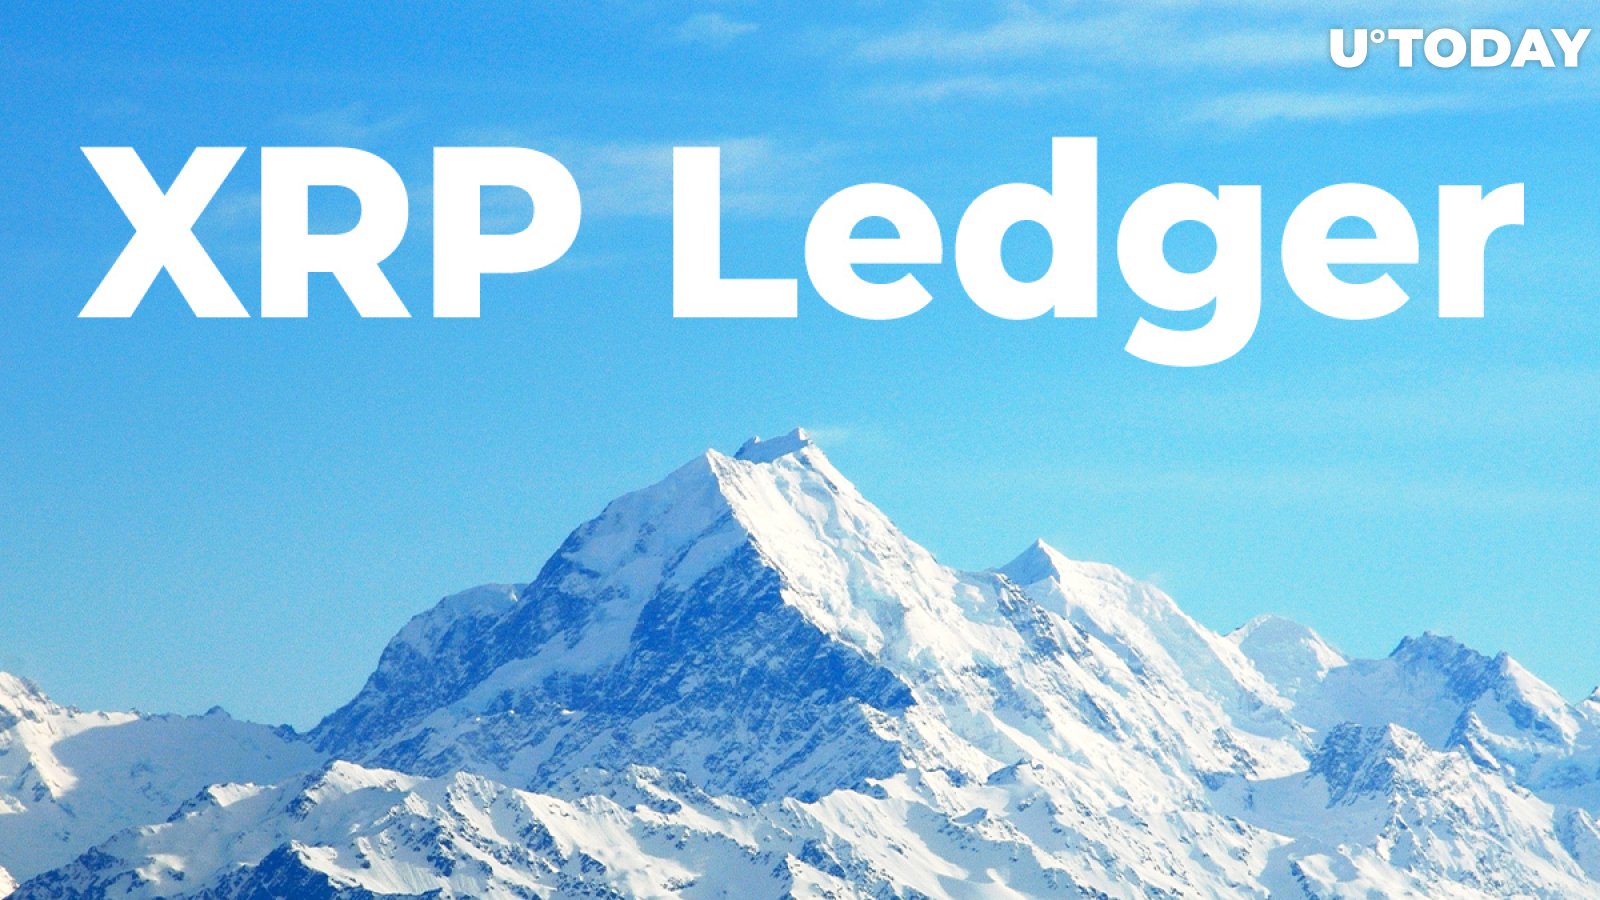 XRP Ledger Celebrates Monumental Milestone 